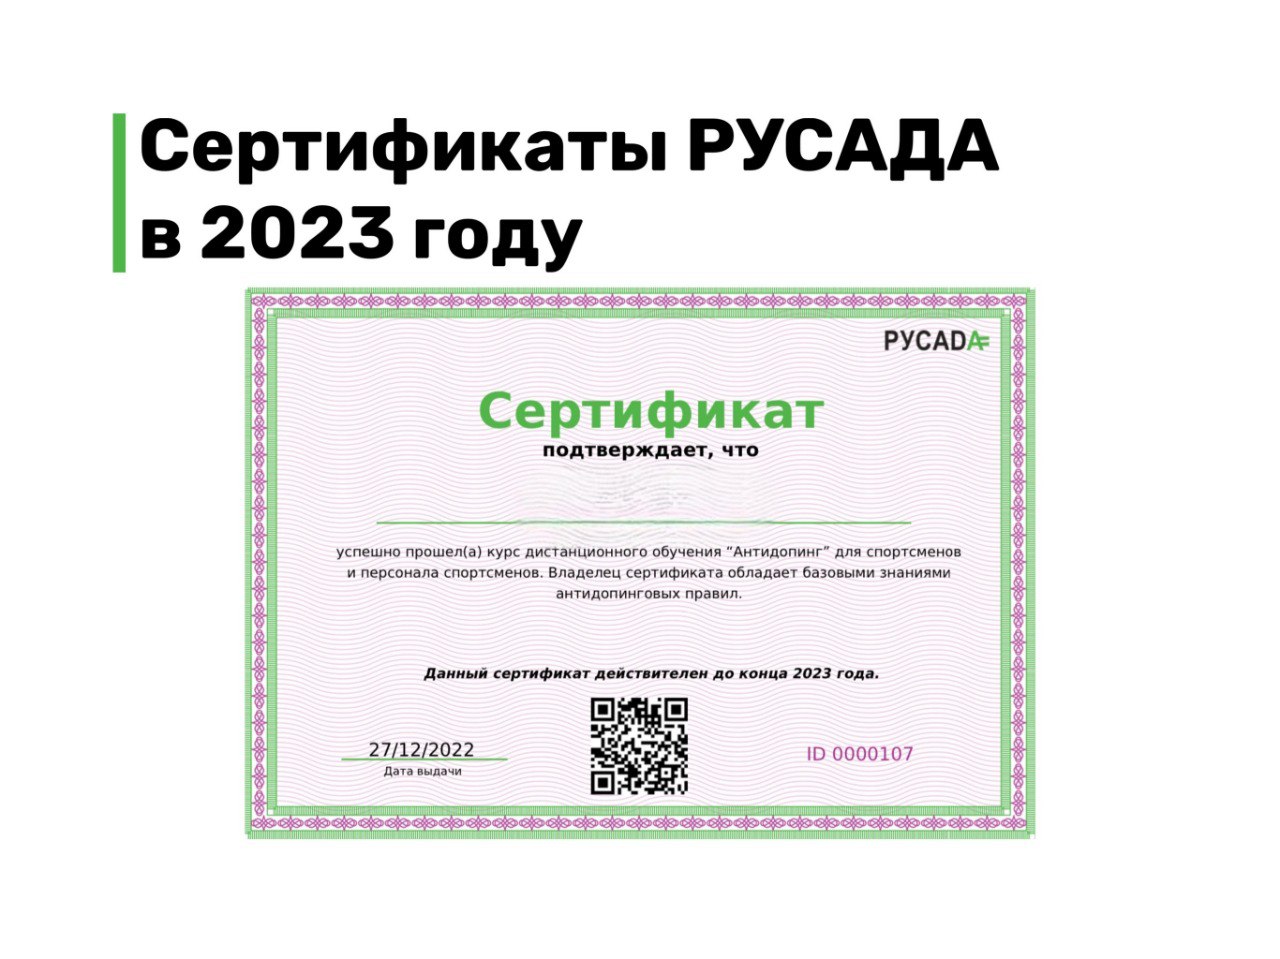 Пройти антидопинговый тест на русада. Сертификат РУСАДА 2023. Сертификат РУСАДА антидопинг 2023. Сертификаты 2023 года. Сертификат РУСАДА антидопинг.